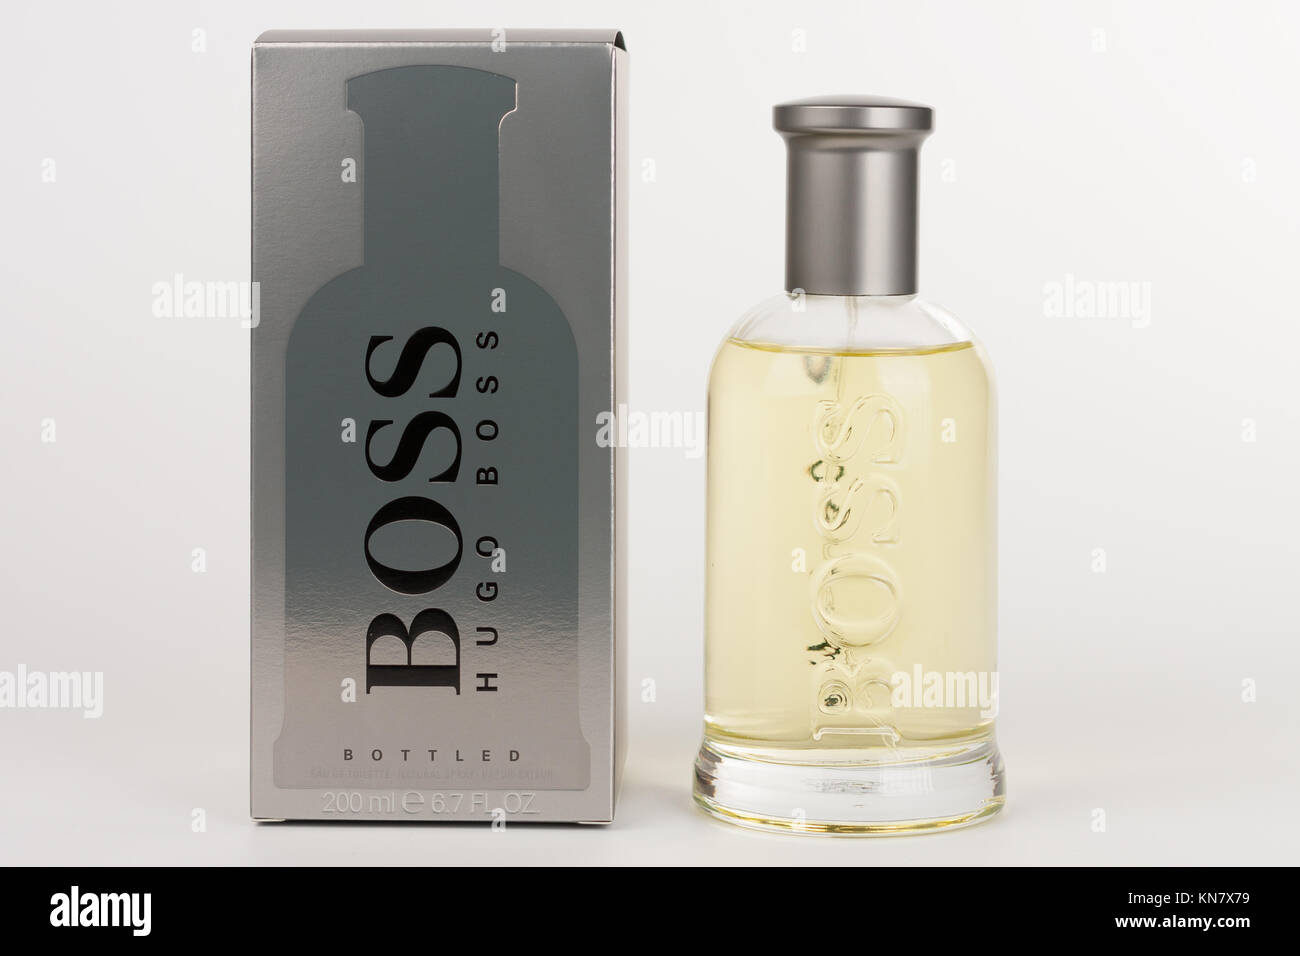 Hugo Boss Perfume High Resolution Stock Photography and Images - Alamy